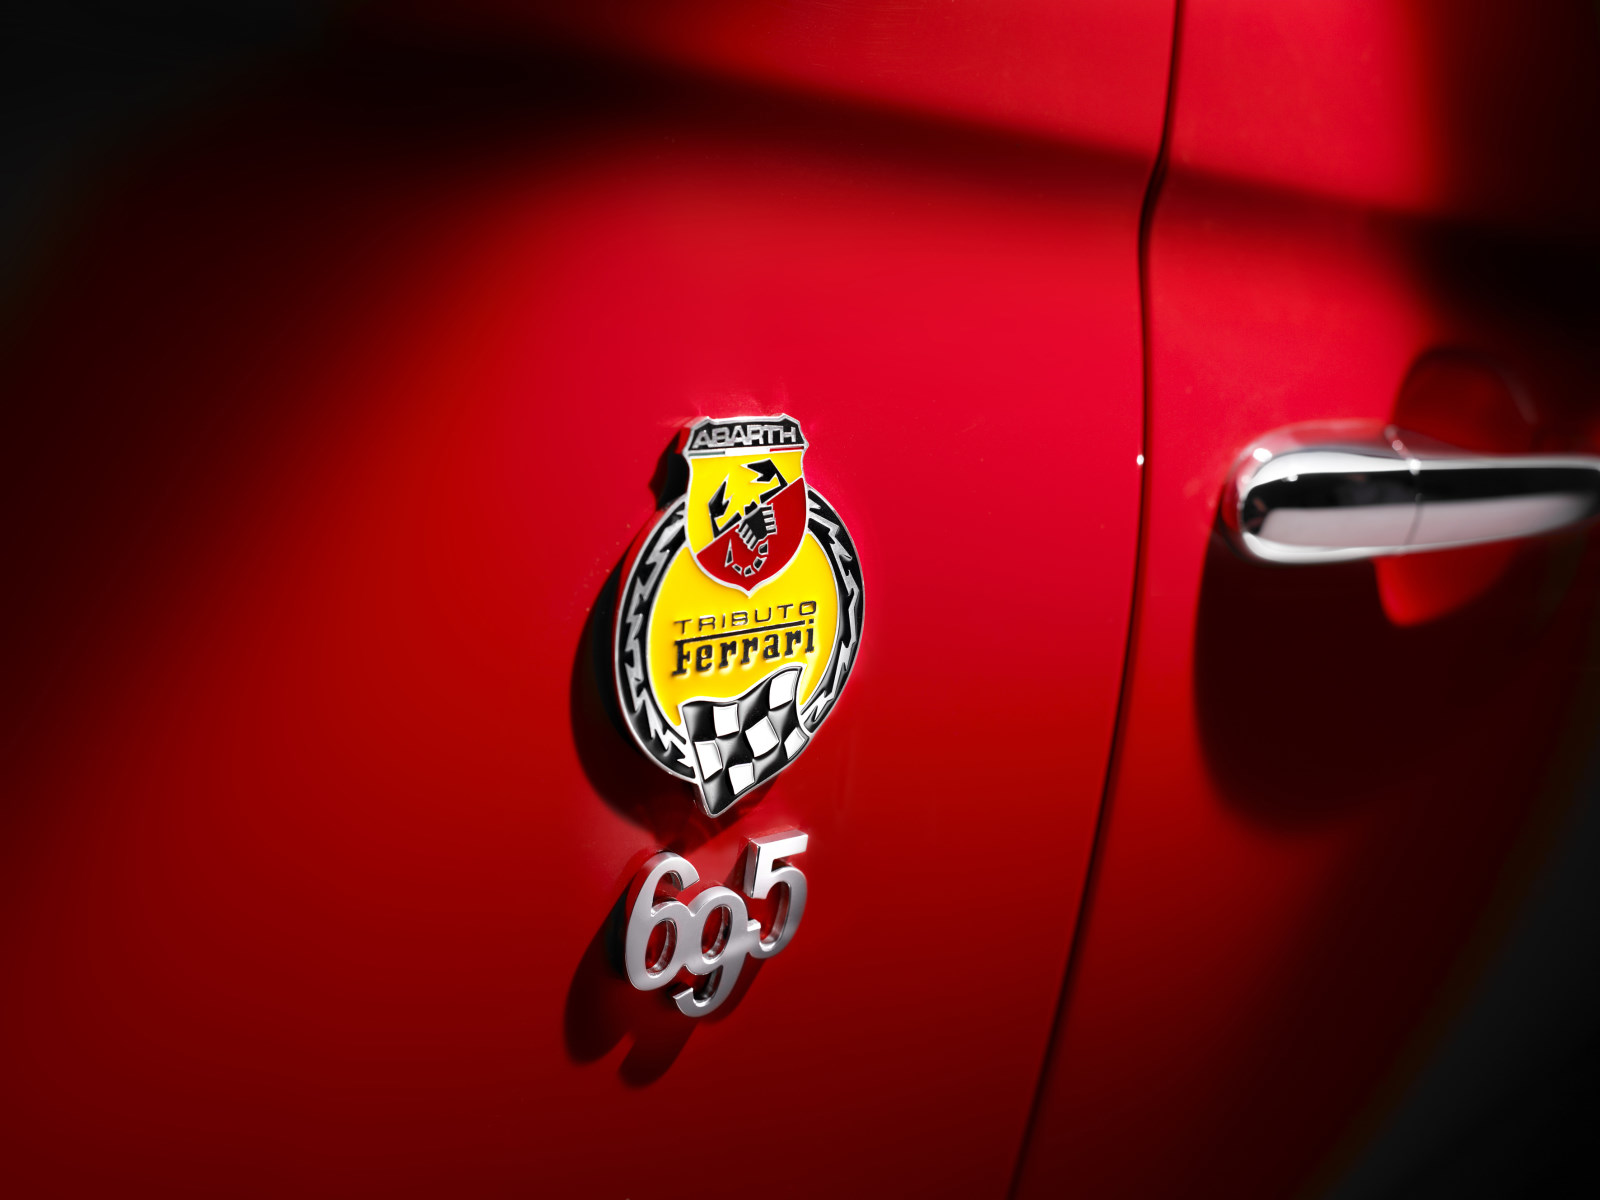 Love Ferrari Exotic Cars フェラーリの世界 高級車の情報 アバルト 695 トリビュート フェラーリ